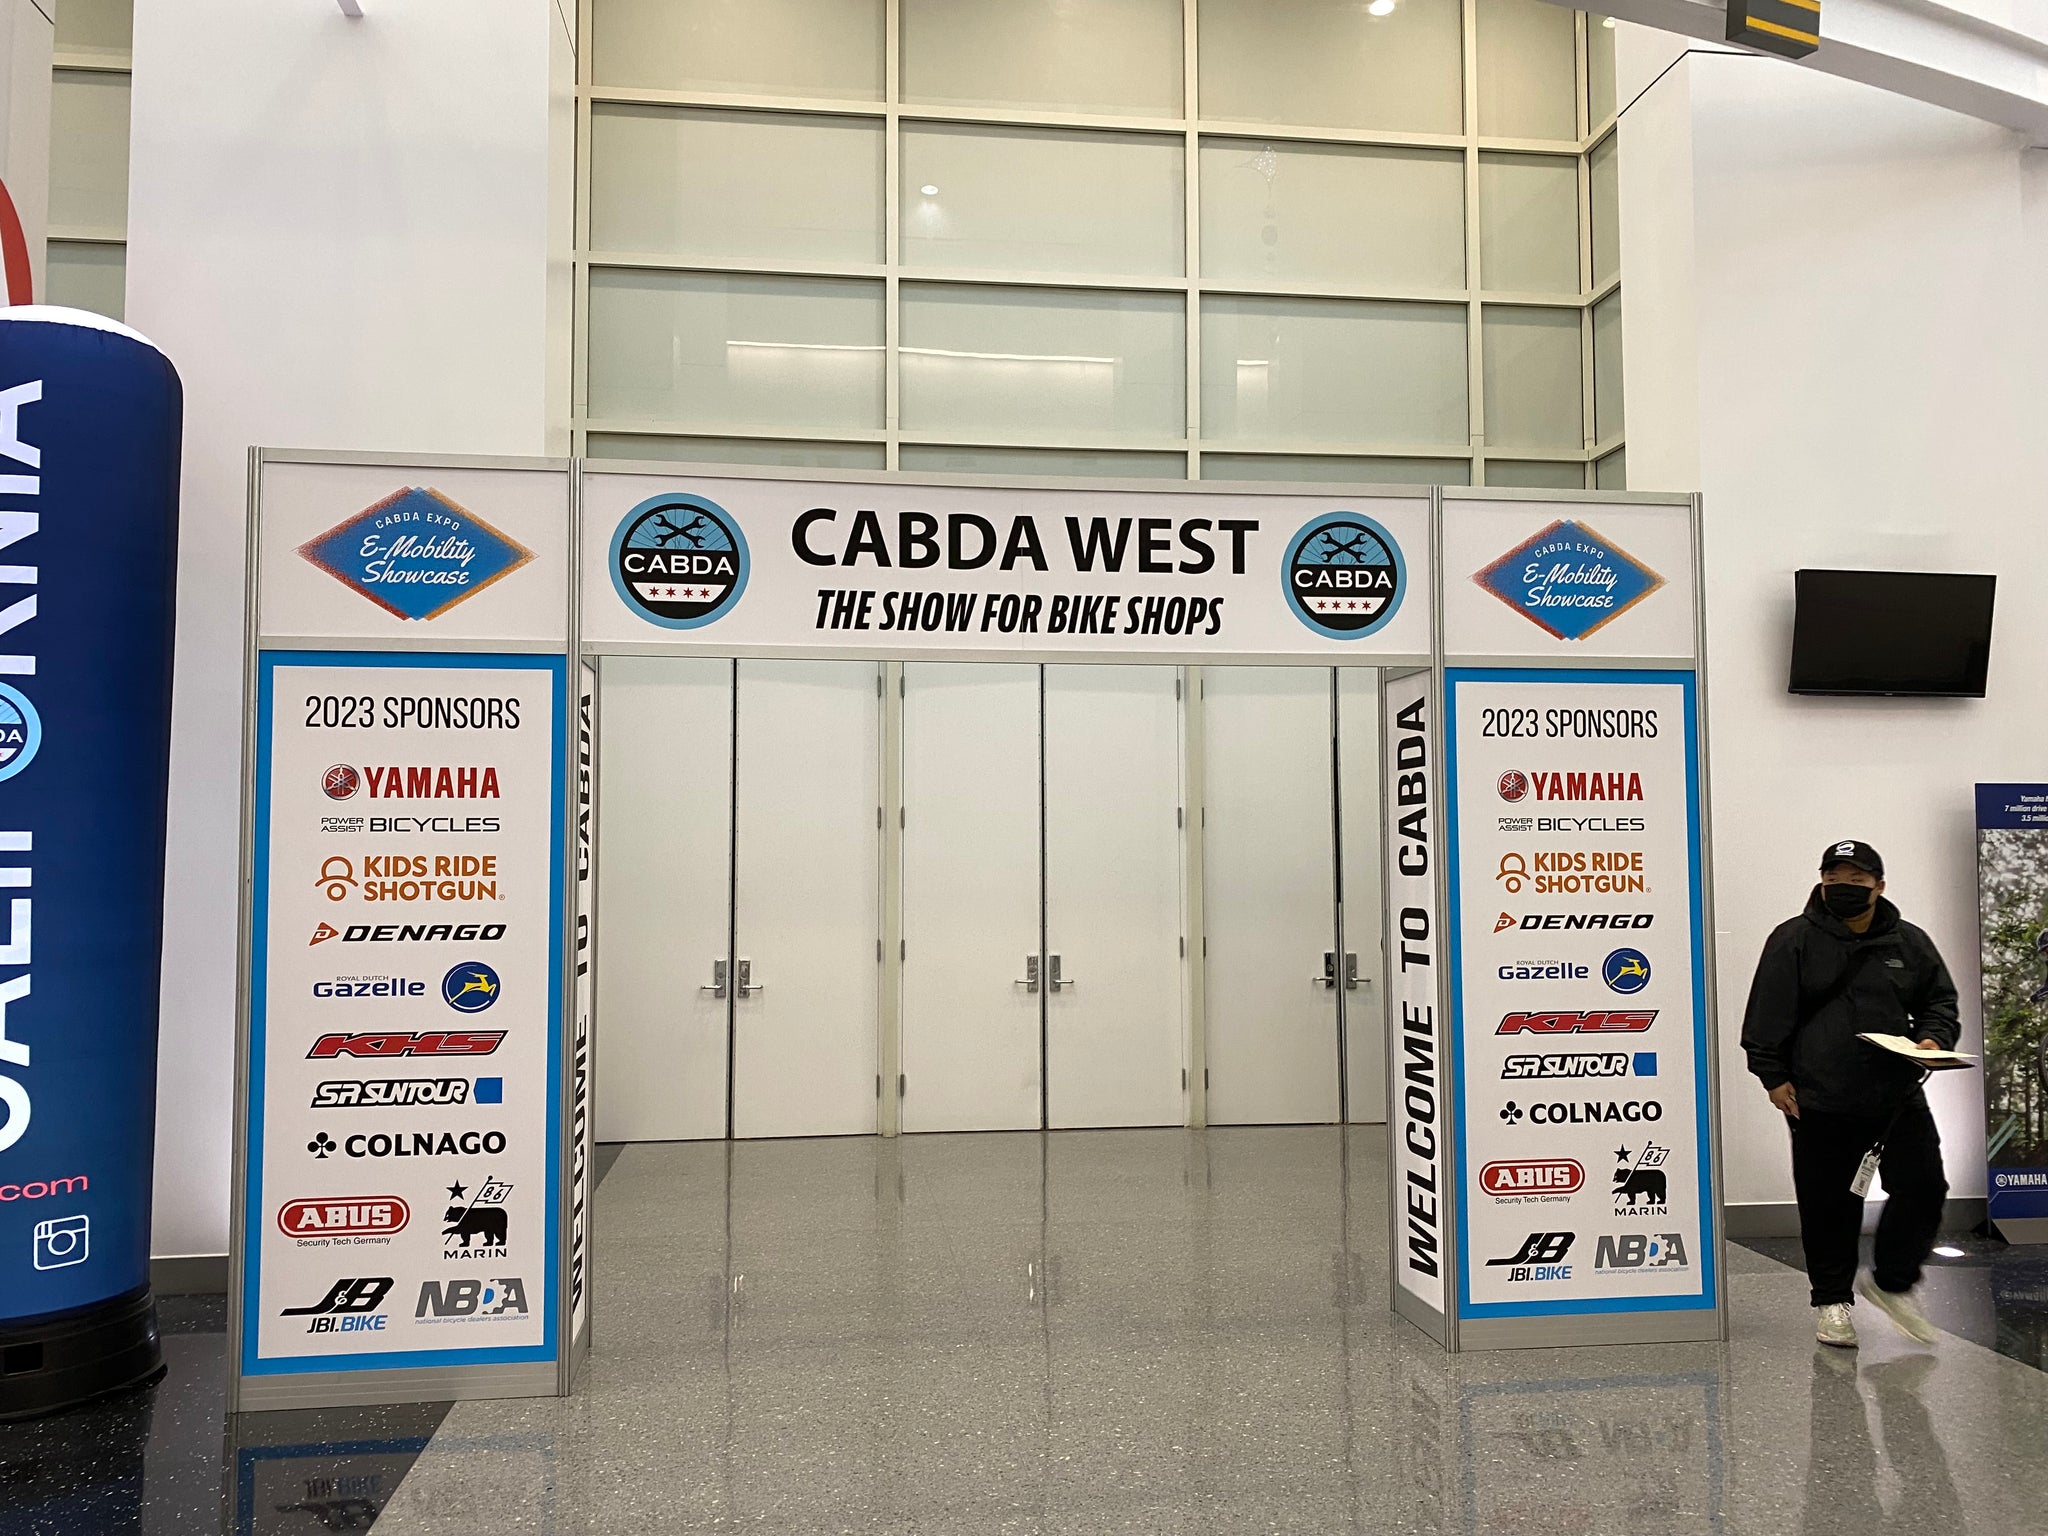 CABDA Show 2023 at Ontario Convention Center - Los Angeles Metro Area